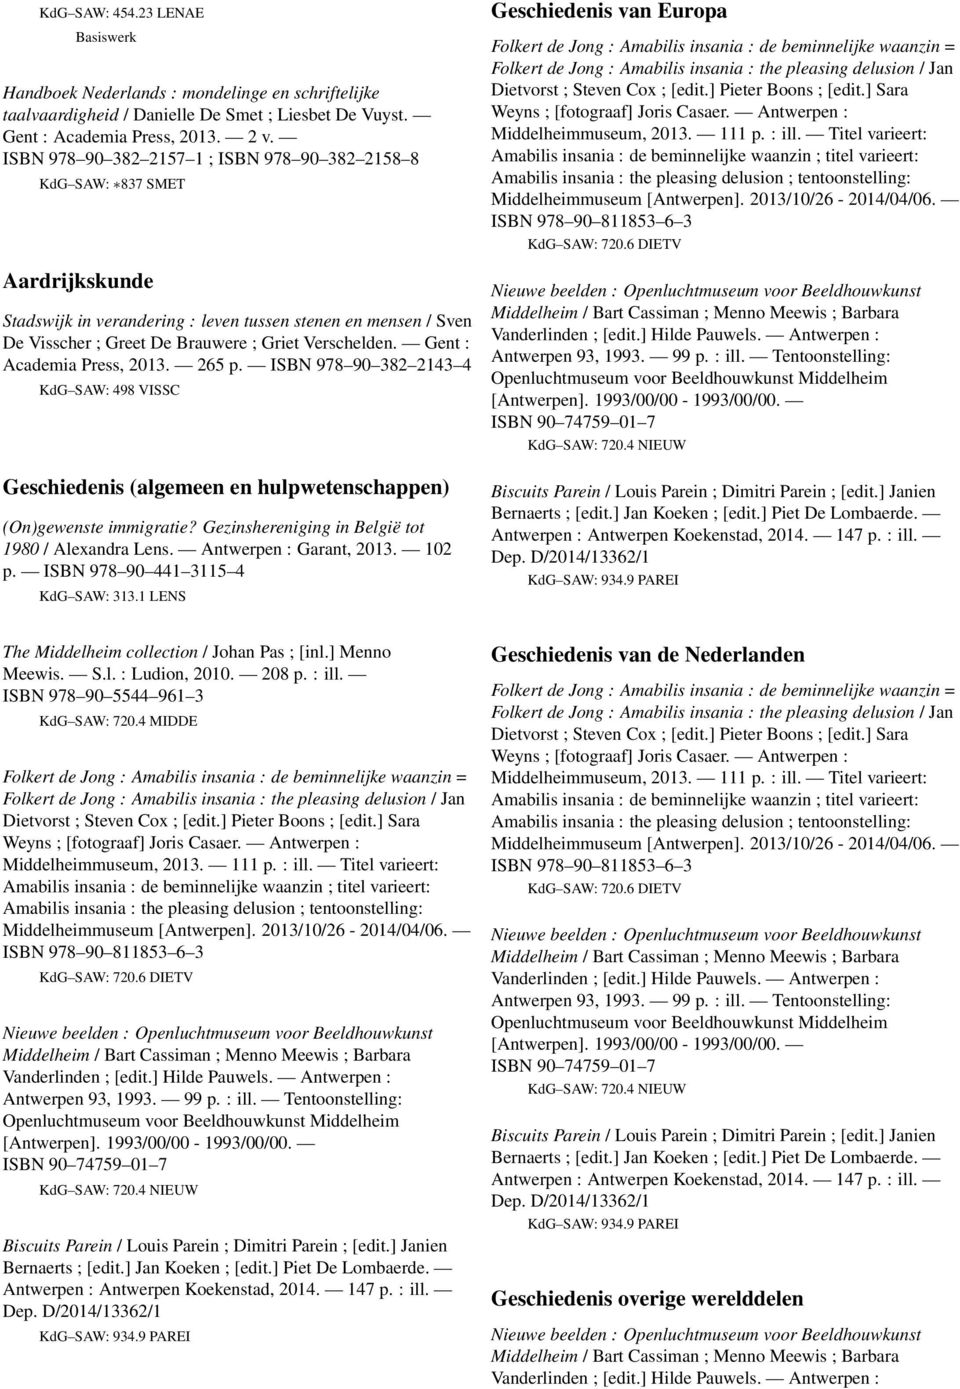 Amabilis insania : the pleasing delusion / Jan Dietvorst ; Steven Cox ; [edit.] Pieter Boons ; [edit.] Sara Weyns ; [fotograaf] Joris Casaer. Antwerpen : Middelheimmuseum, 2013. 111 p. : ill.